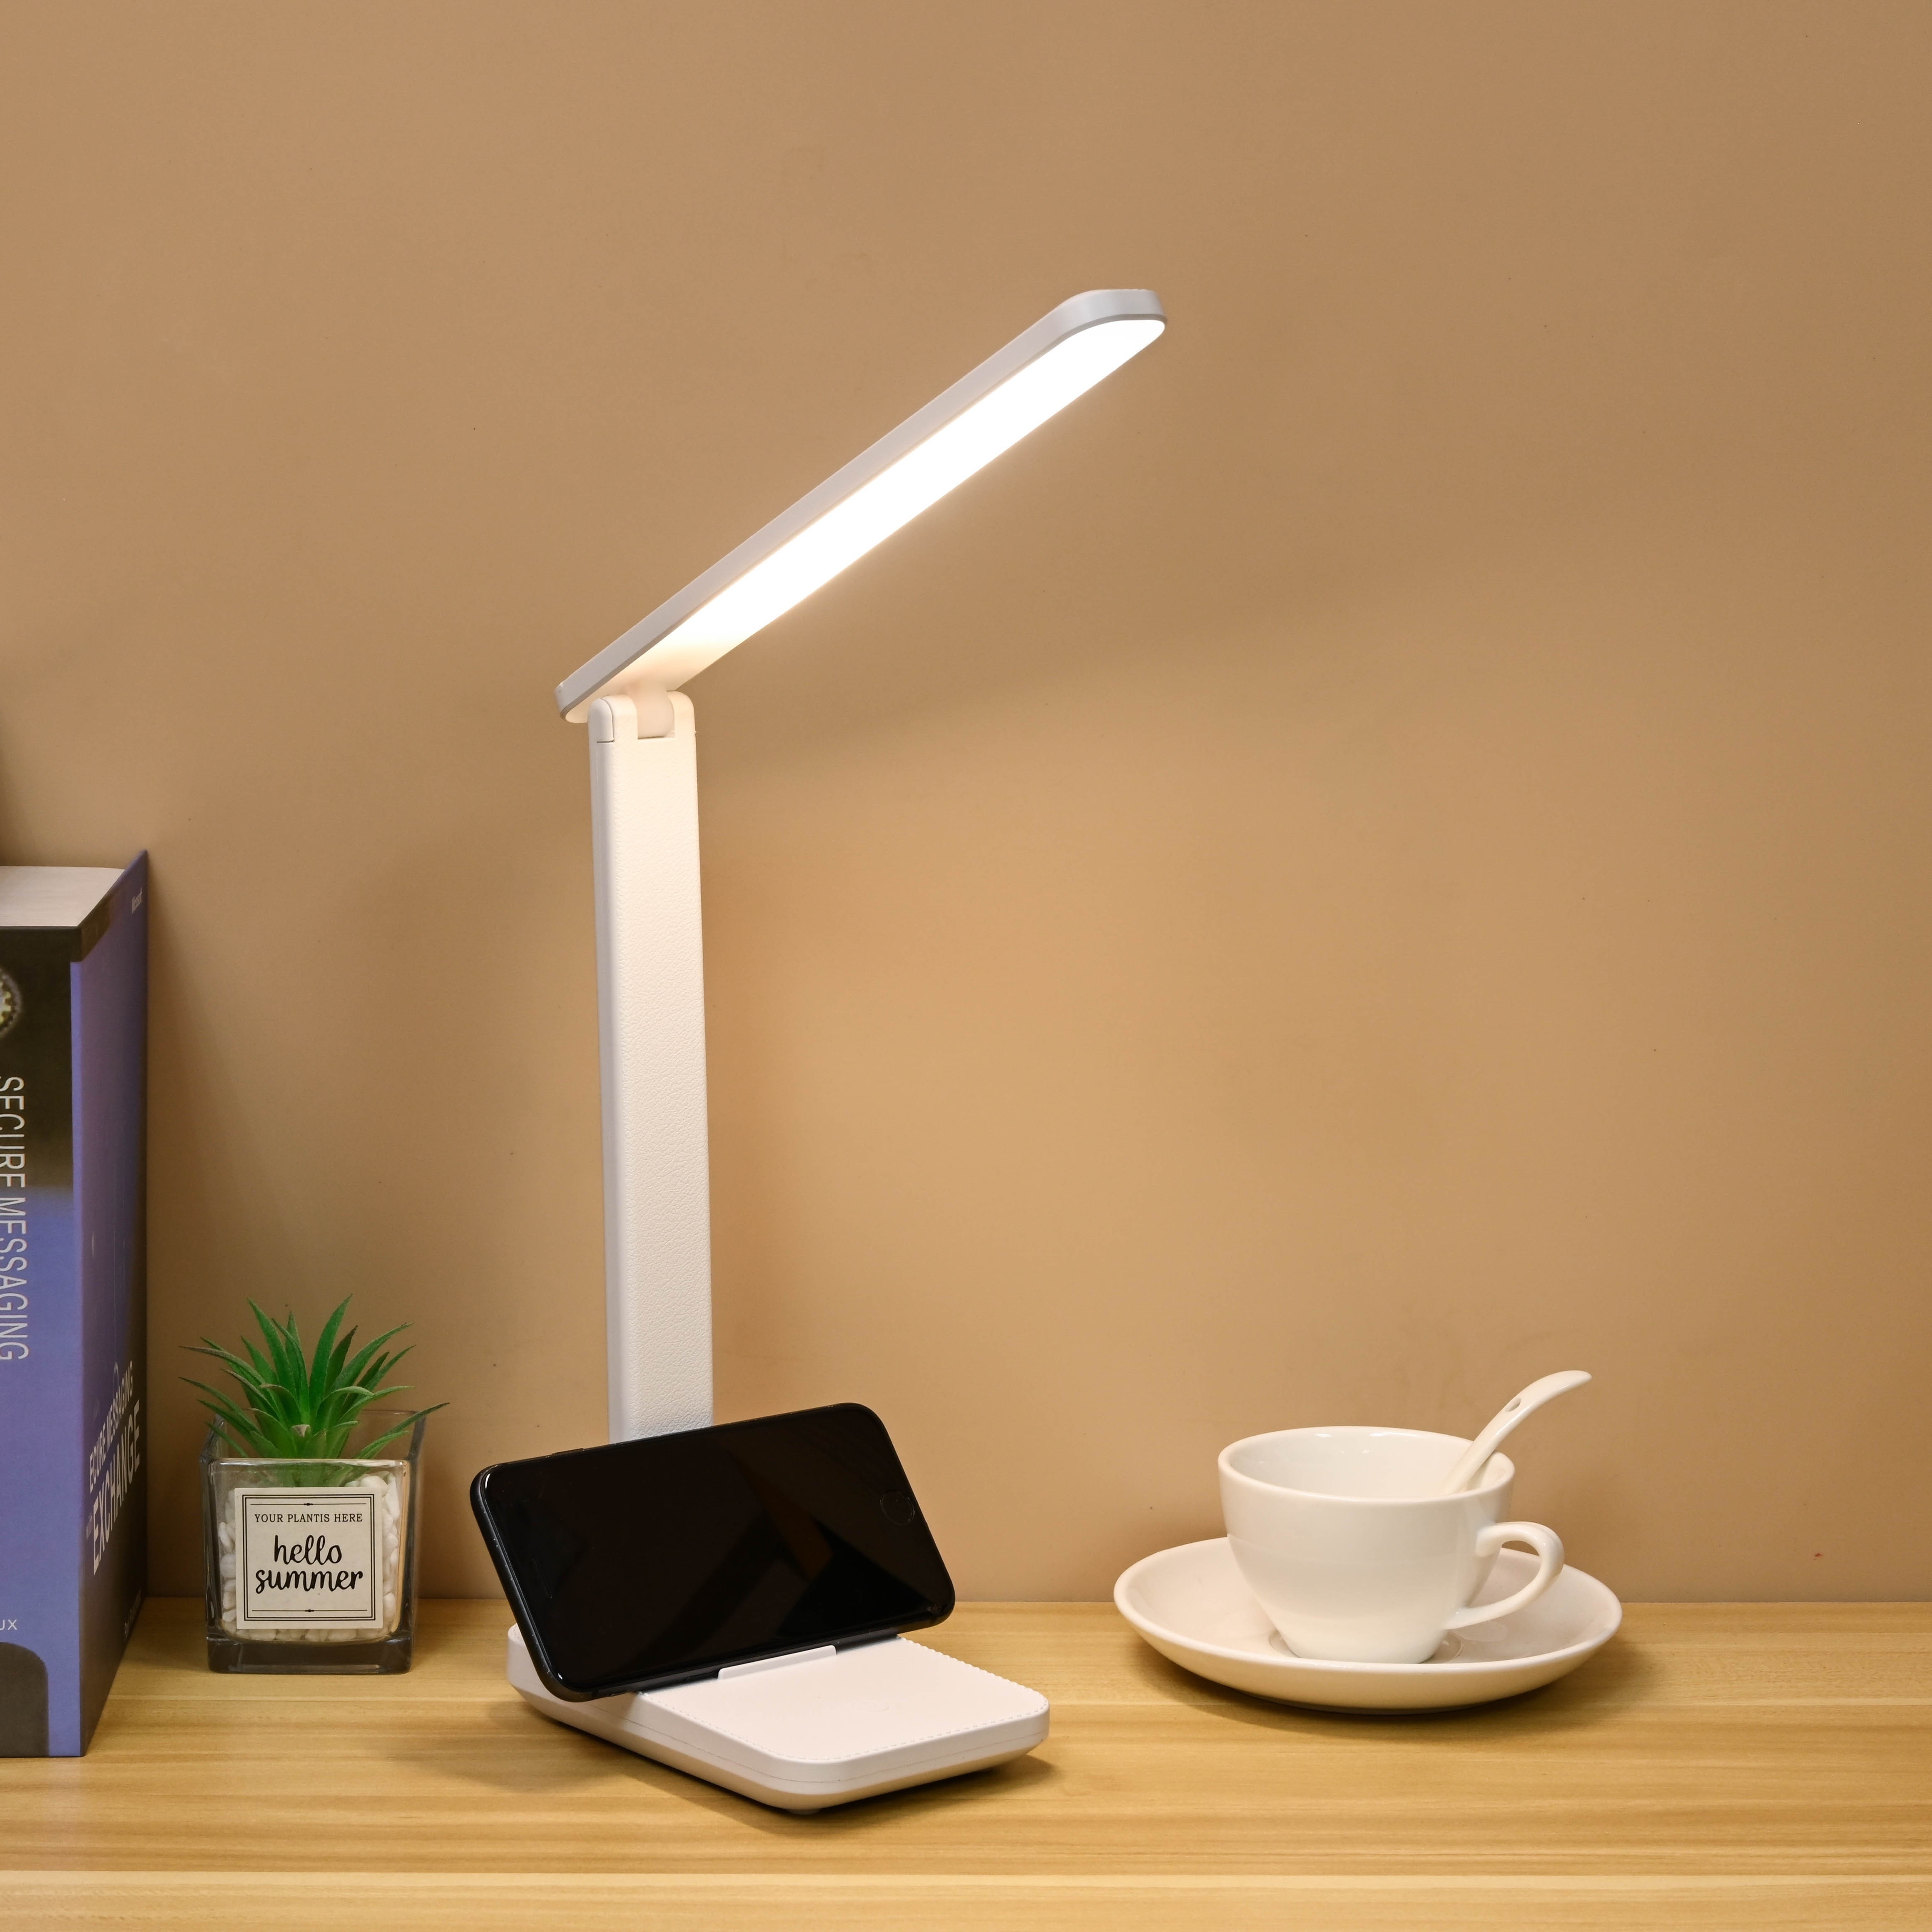 Zealinno Double Head LED Desk Lamp Review & Demo